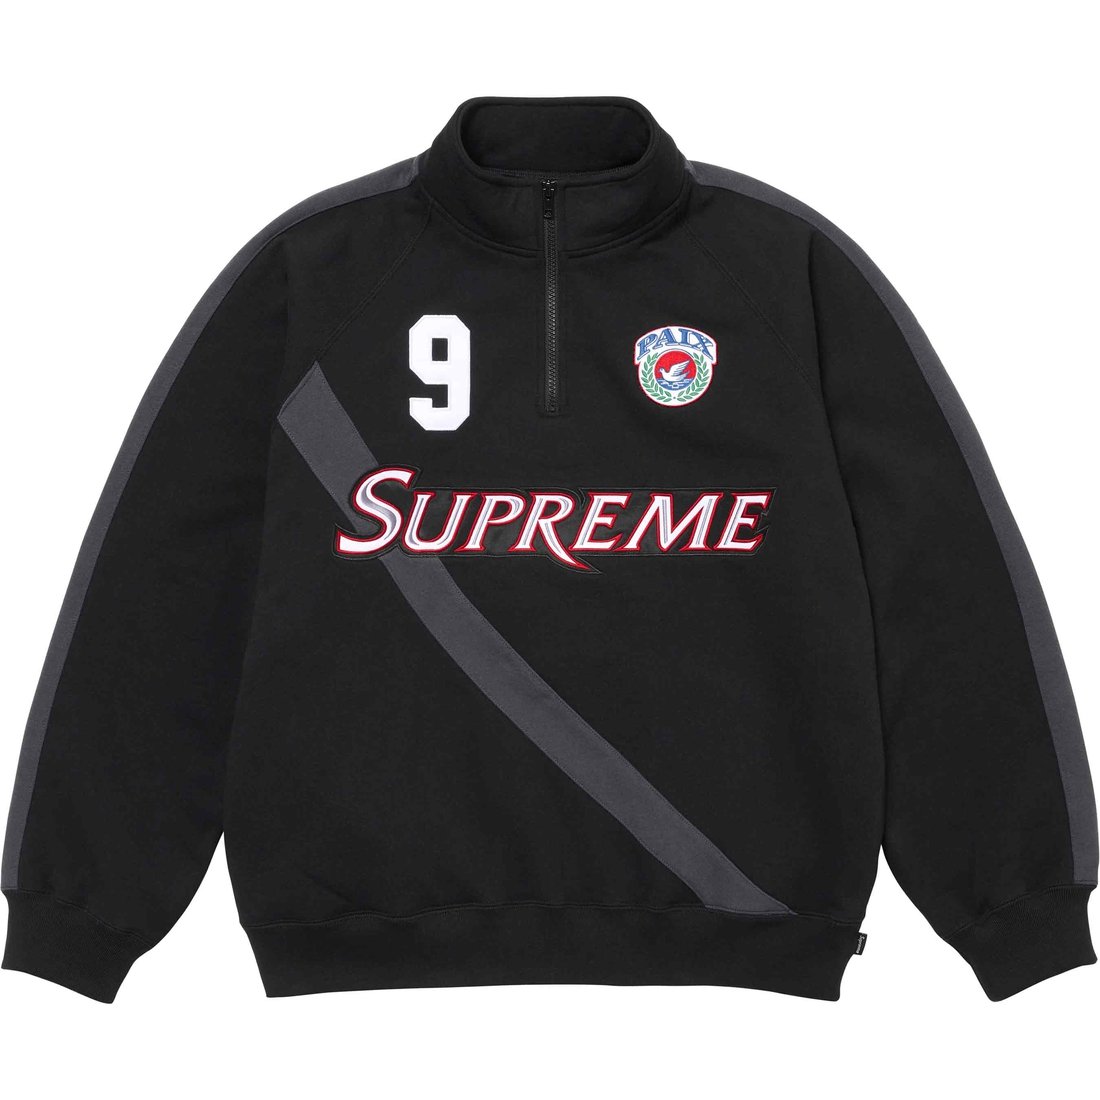 Details on Equipé Half Zip Sweatshirt Black from spring summer
                                                    2024 (Price is $168)